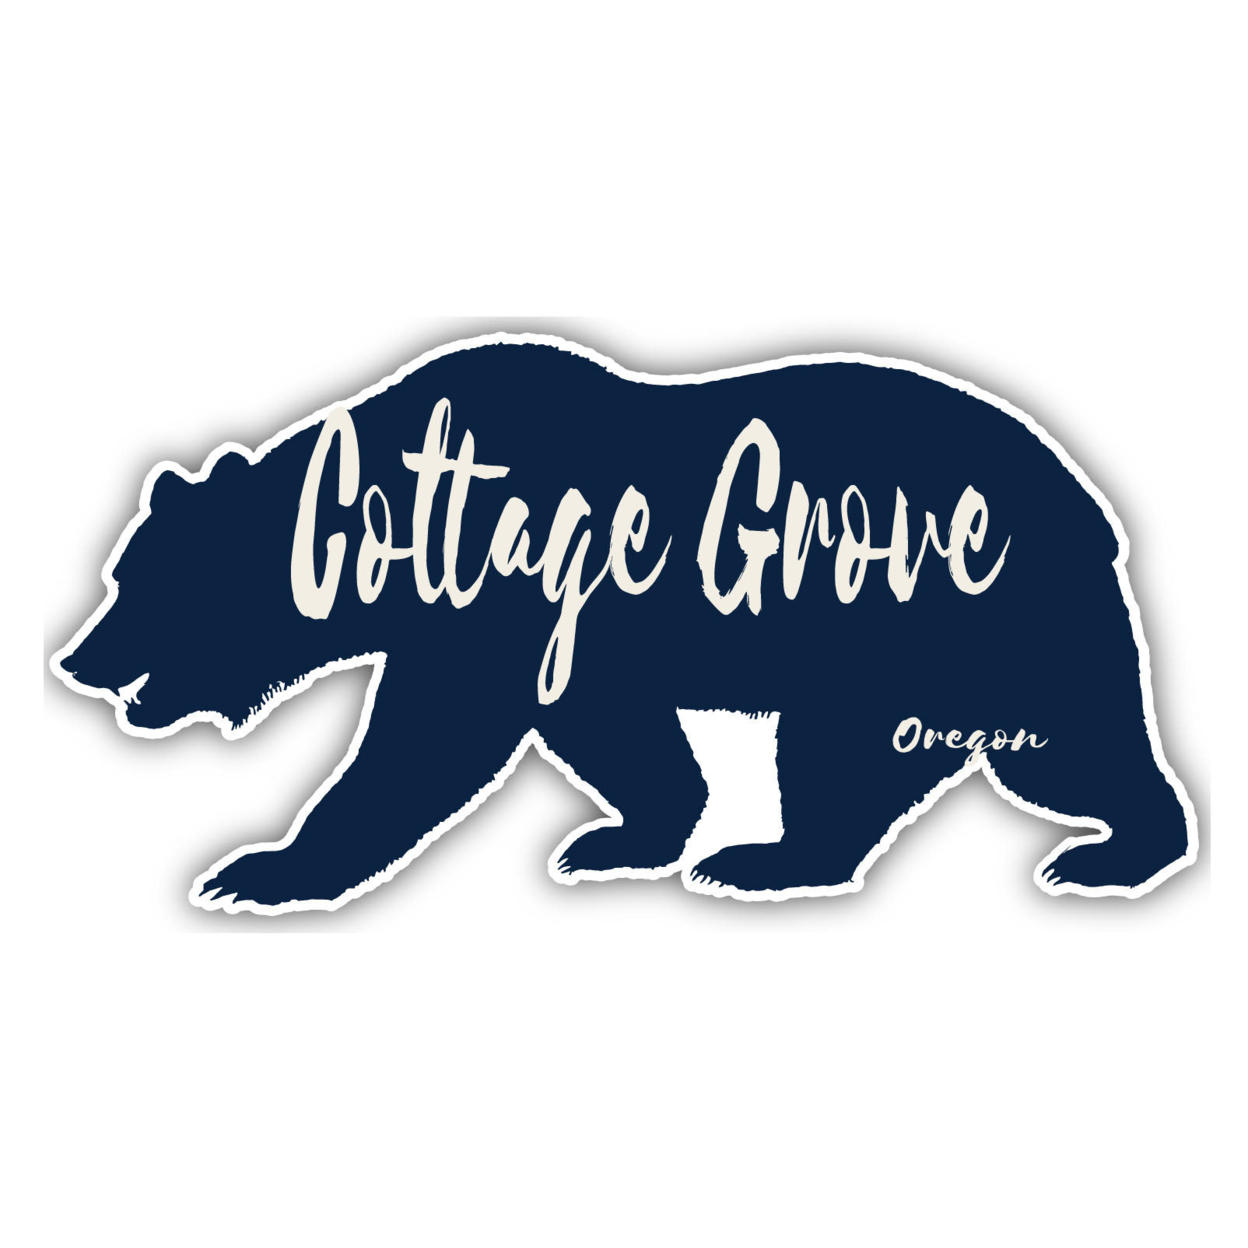 Cottage Grove Oregon Souvenir Decorative Stickers (Choose Theme And Size) - 4-Pack, 8-Inch, Tent